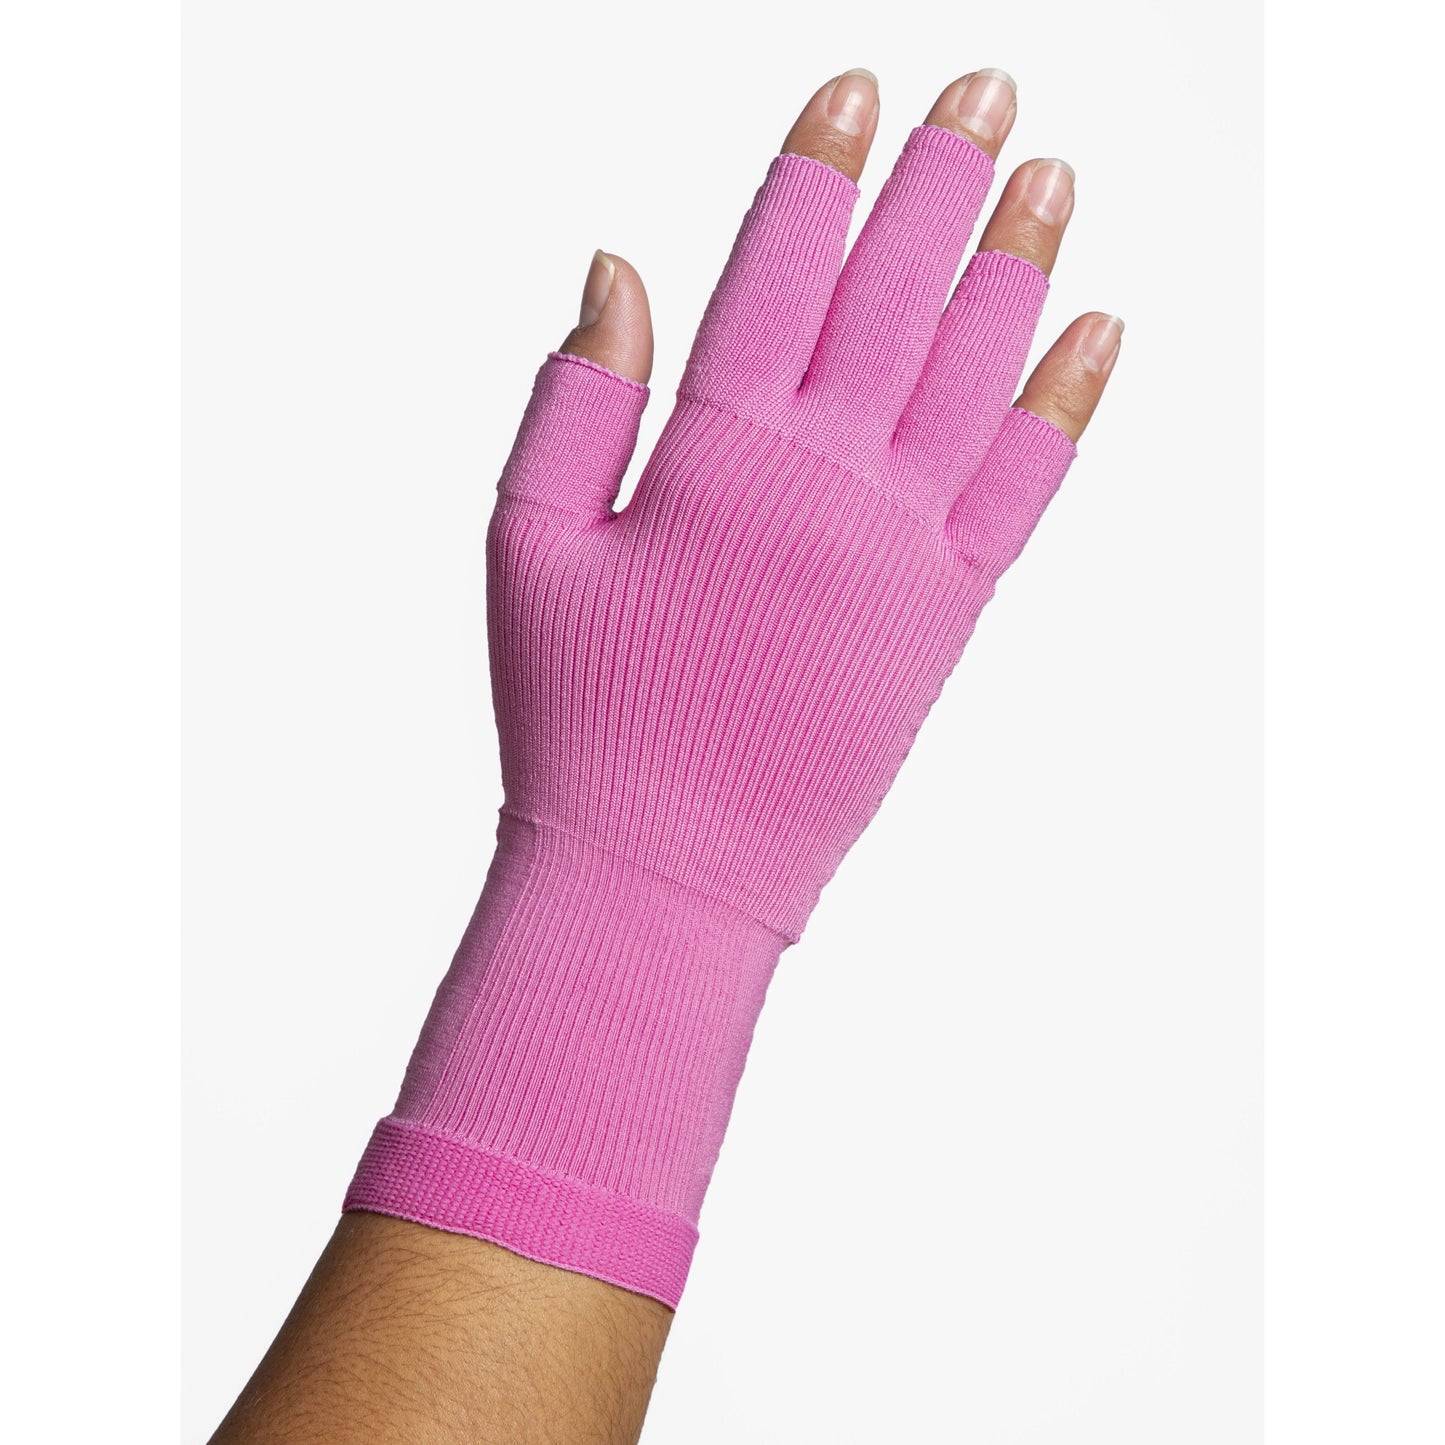 Sigvaris Secure 15-20 mmHg Glove, Dusty Rose